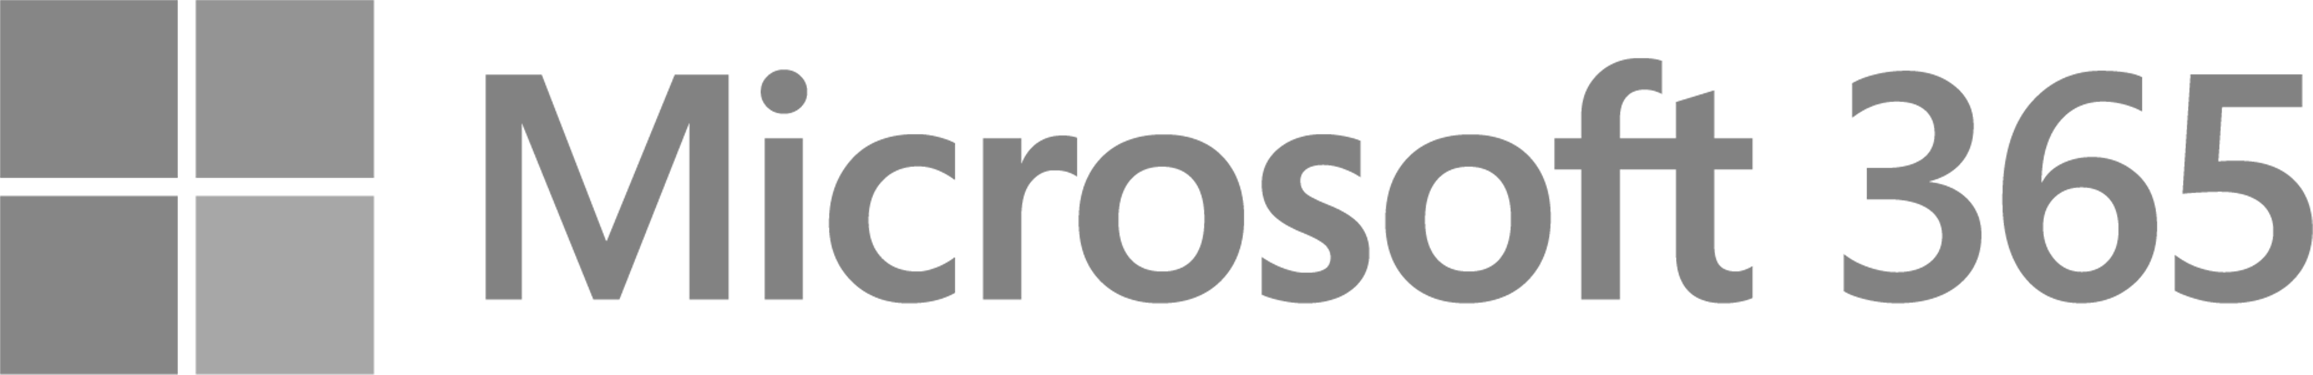 Microsoft 365 logo - large, black and white